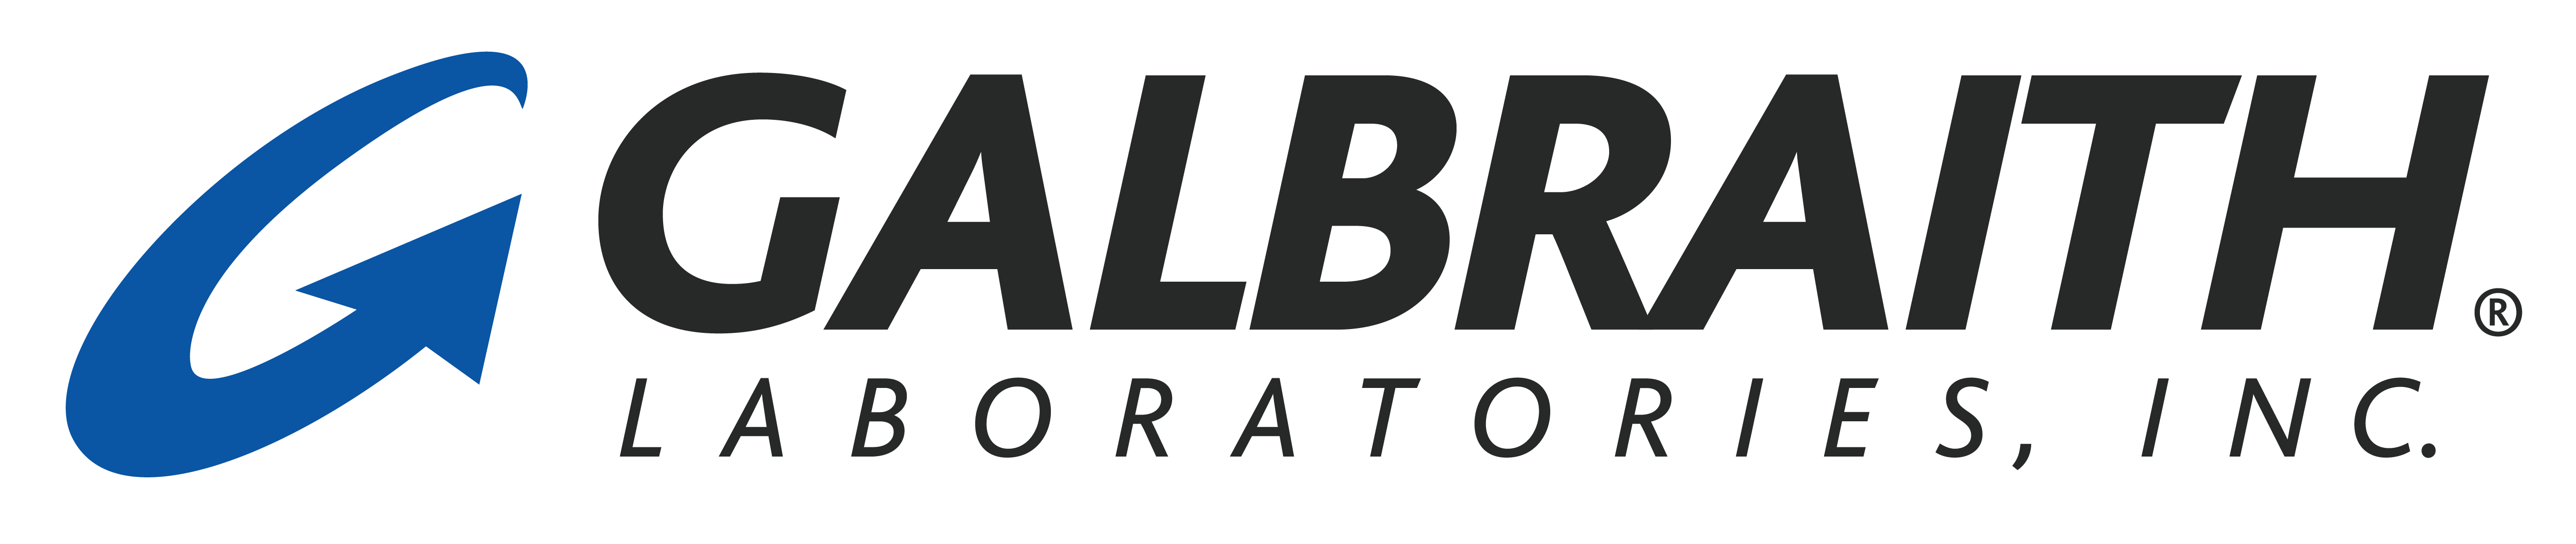 Galbraith Laboratories, Inc.